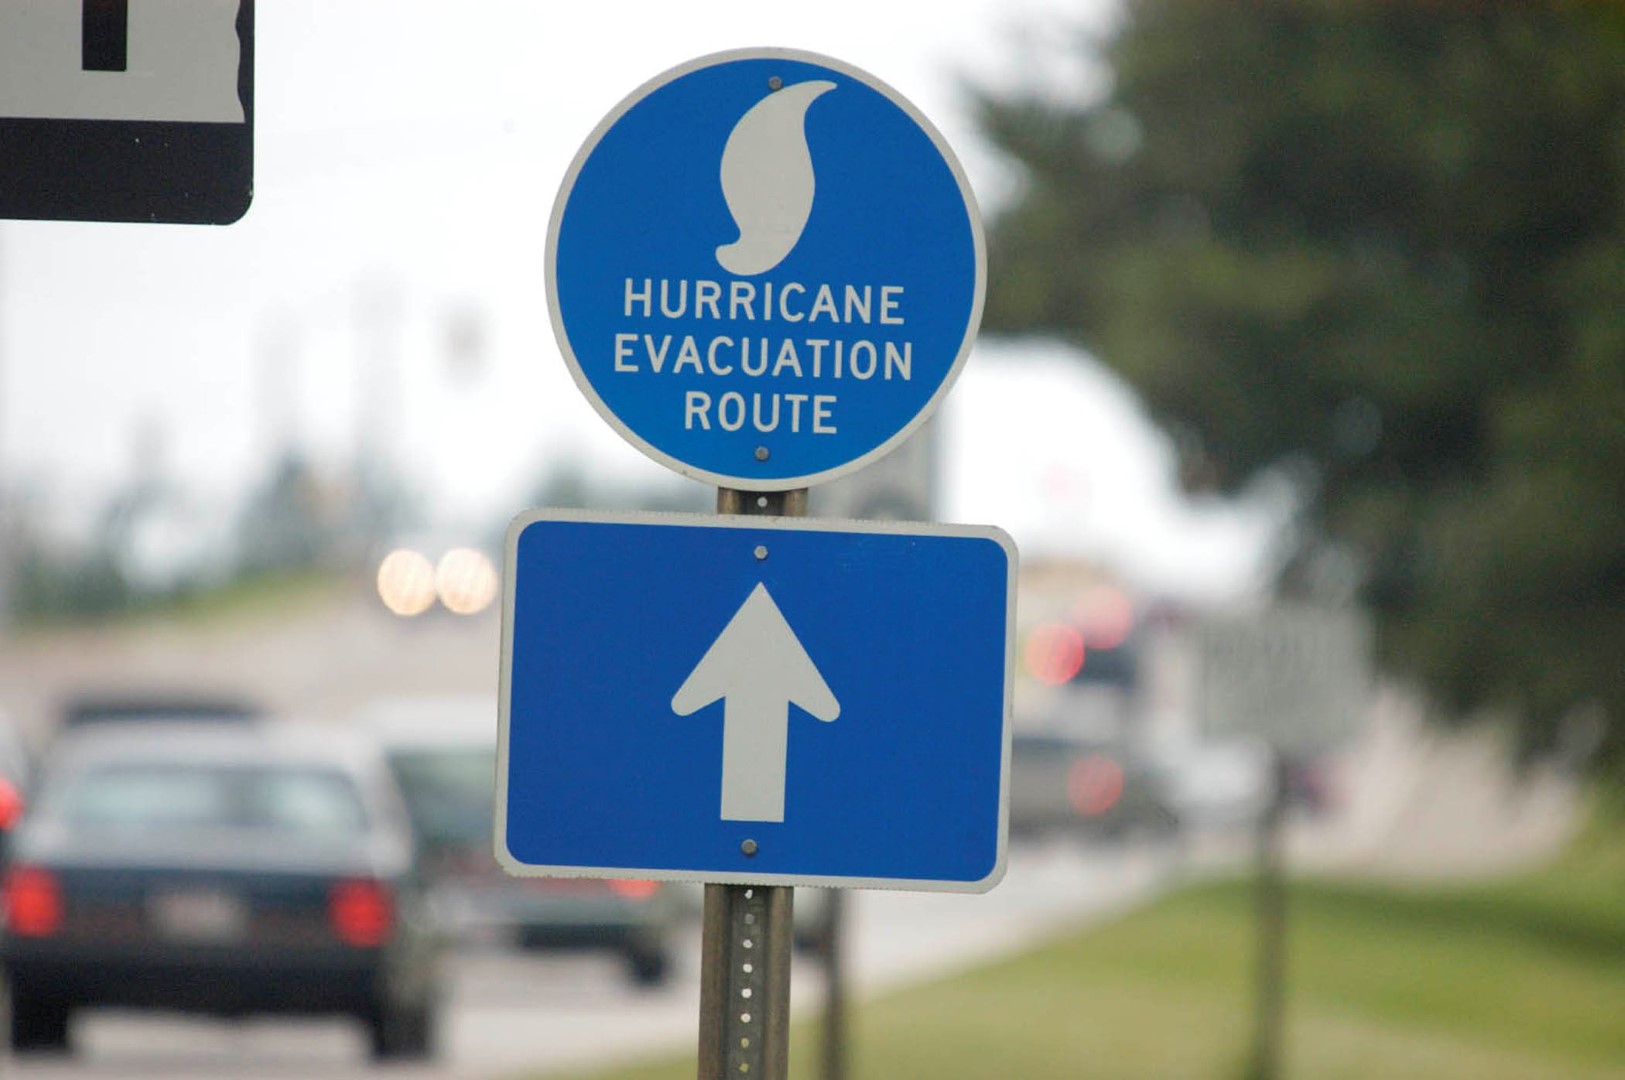 evacuation-route-hurricane-Large.jpg